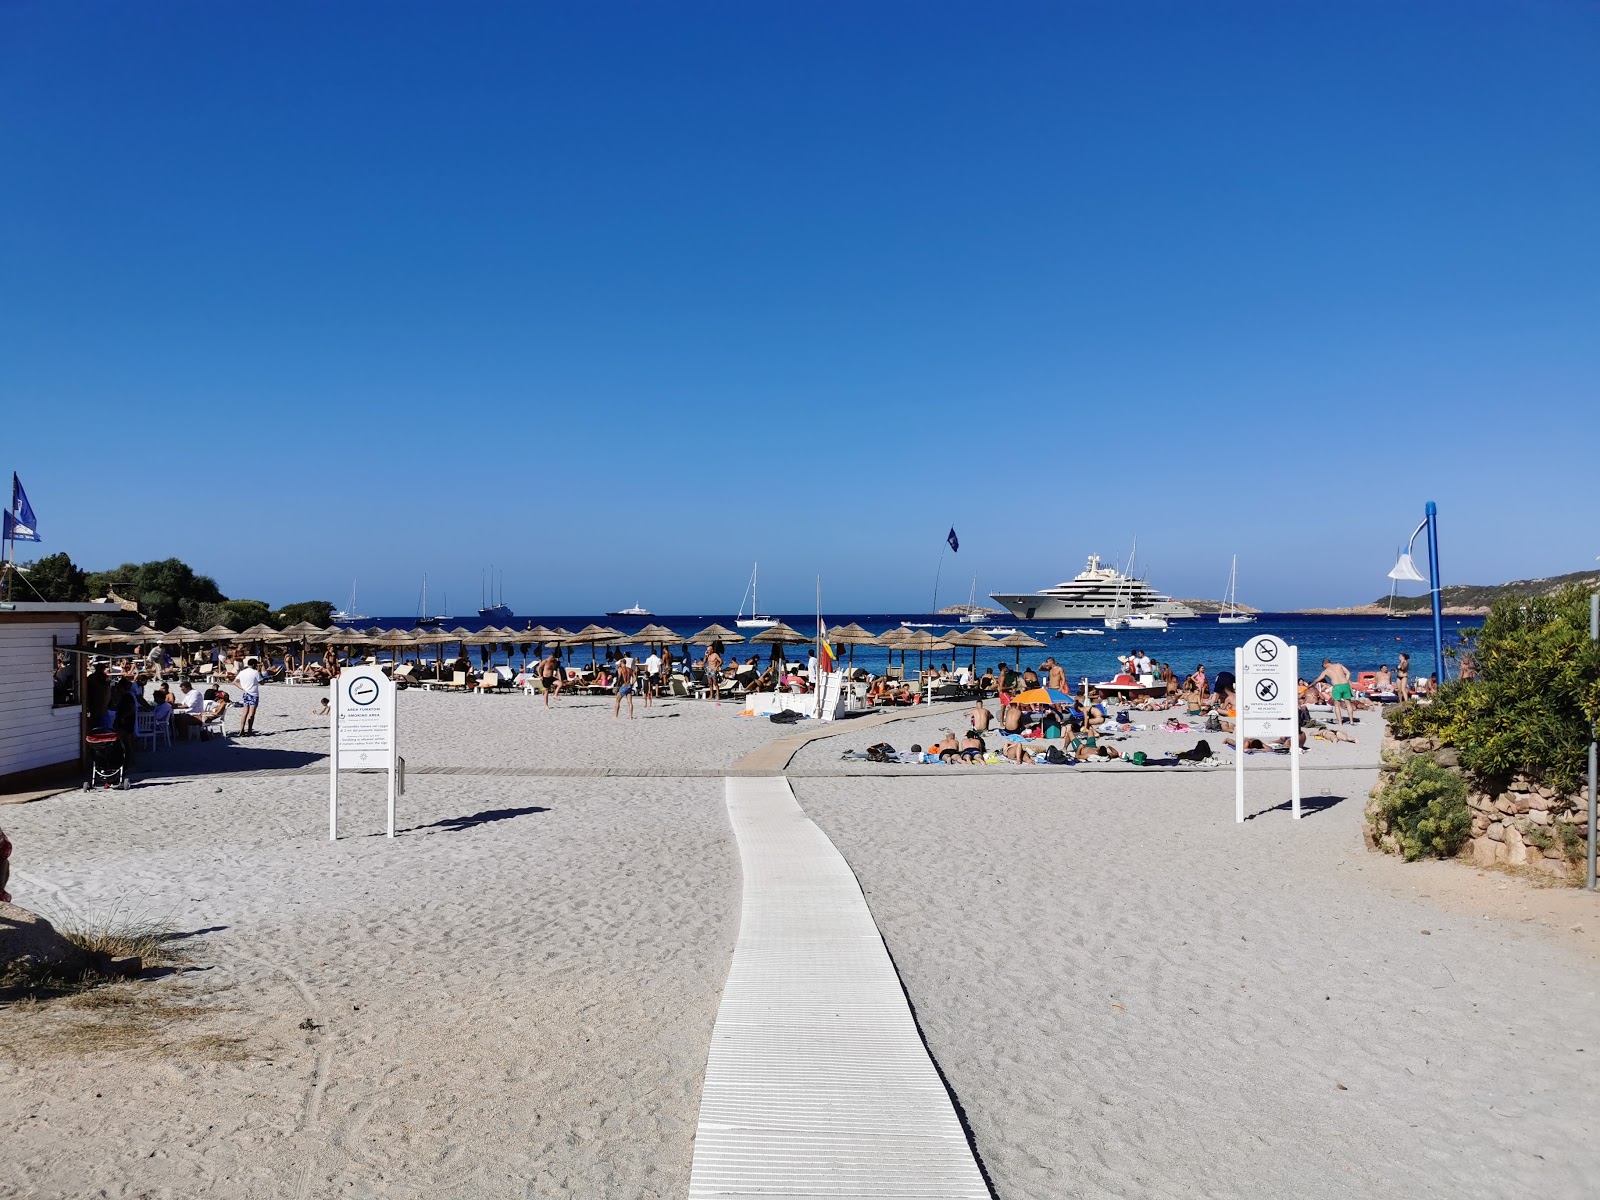 Foto von Spiaggia Piccolo Pevero mit türkisfarbenes wasser Oberfläche